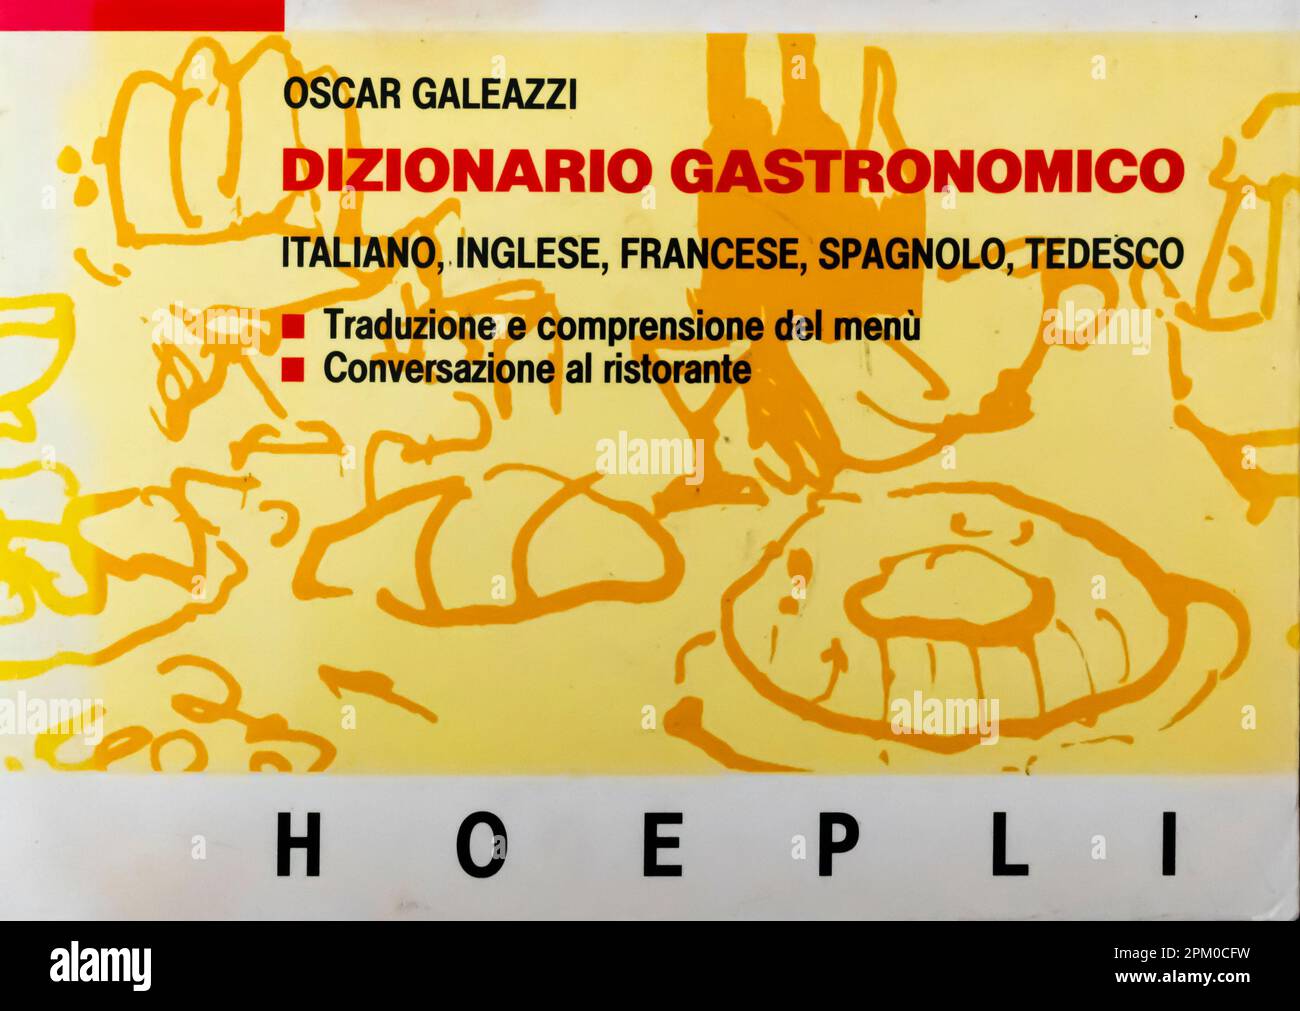 Dizionario gastronomico versione cartacea Multilingual Edition di Oscar Galeazzi 1994. Hoepli Foto Stock